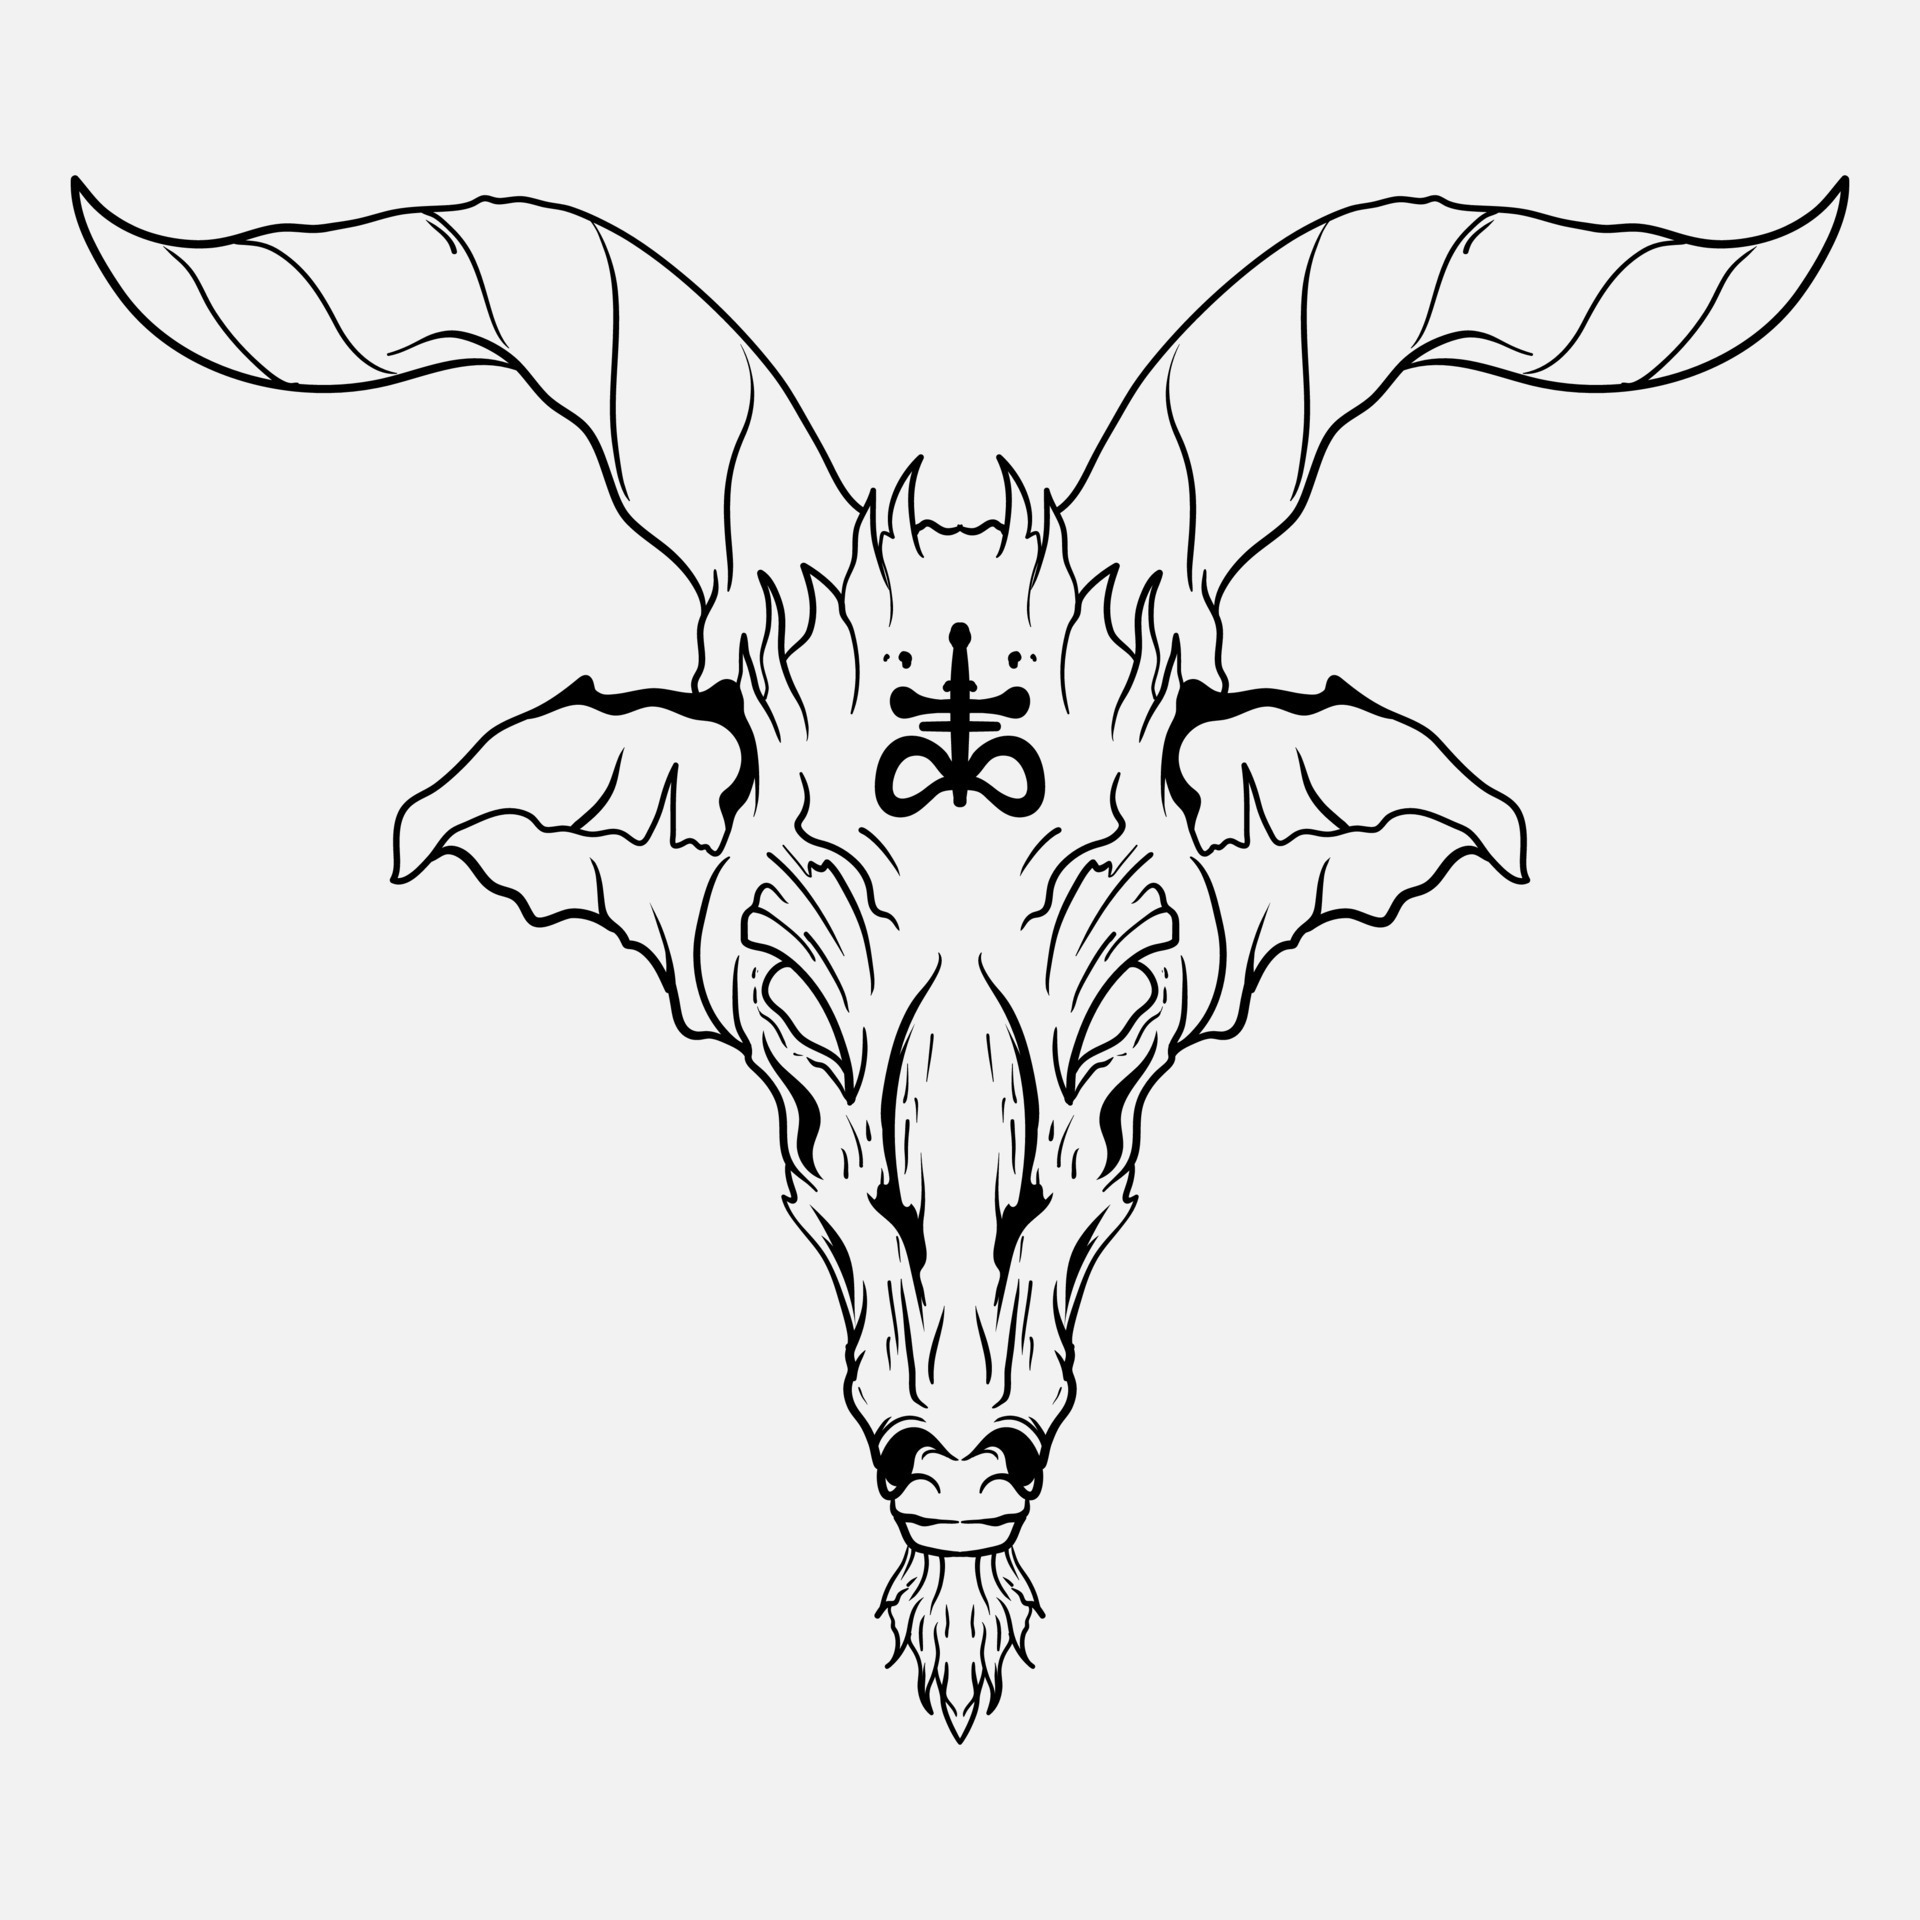 5231 Goat Skull Tattoo Images Stock Photos  Vectors  Shutterstock